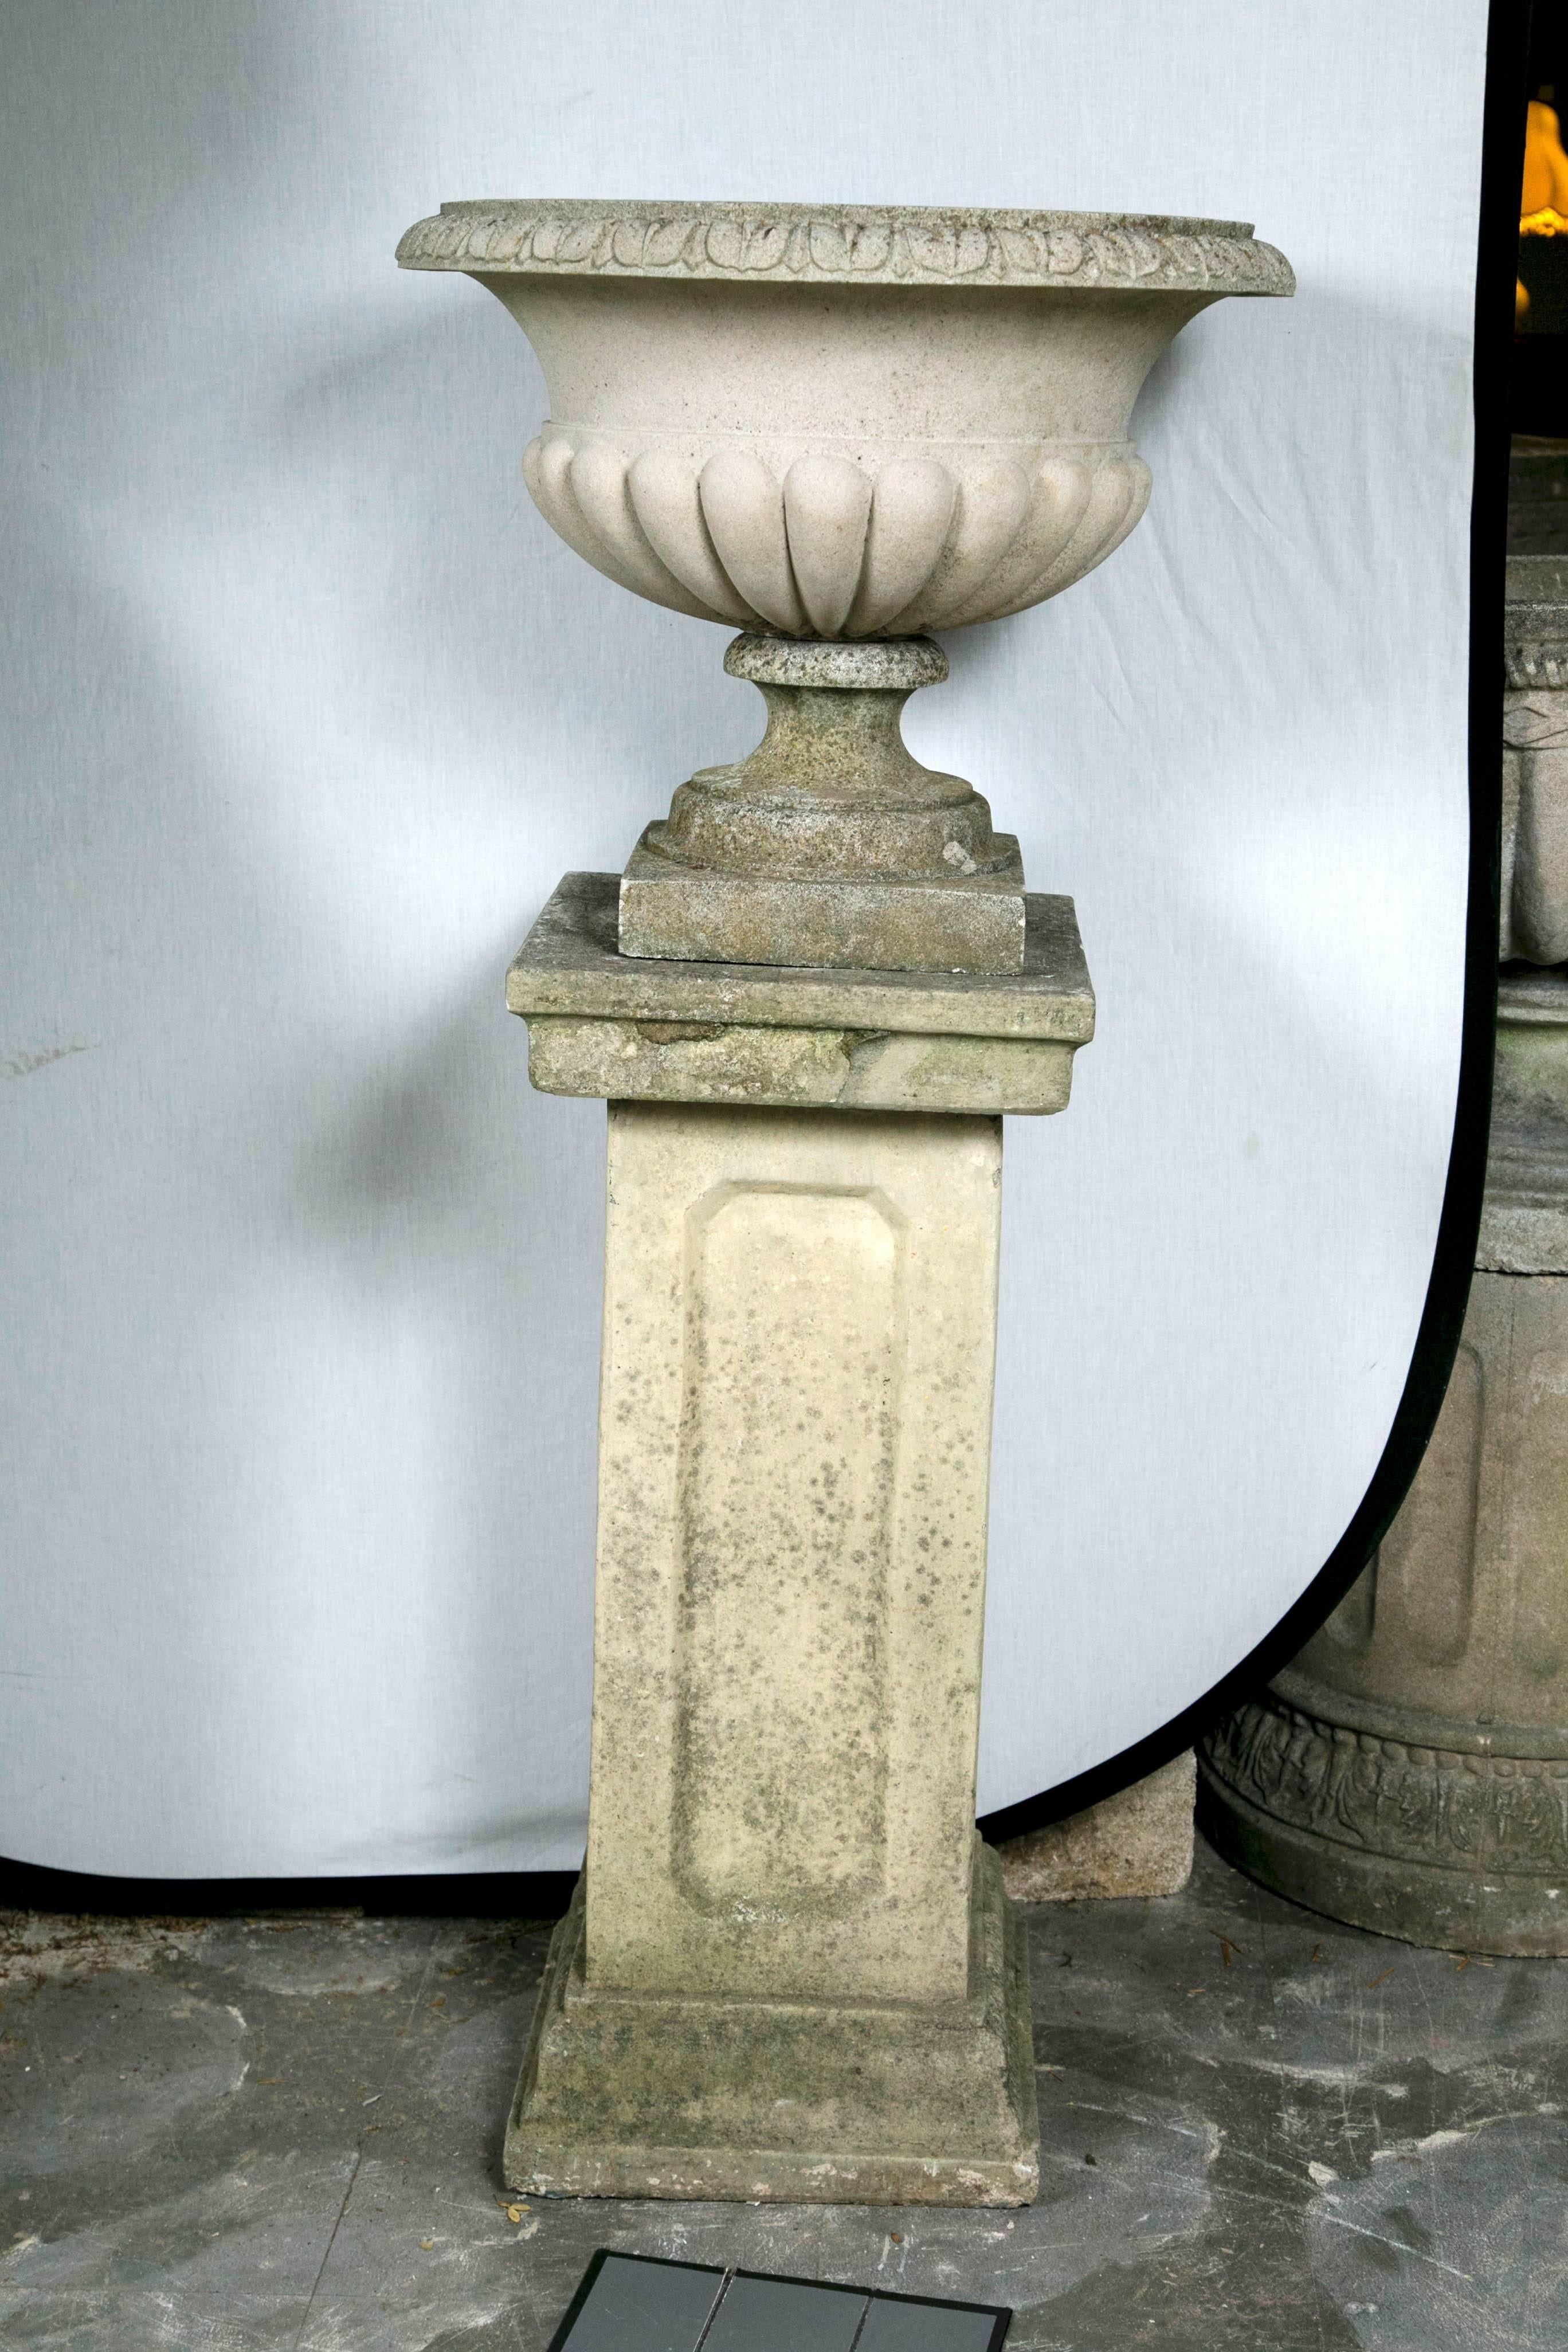 Stunning pair of English garden urns on stands.